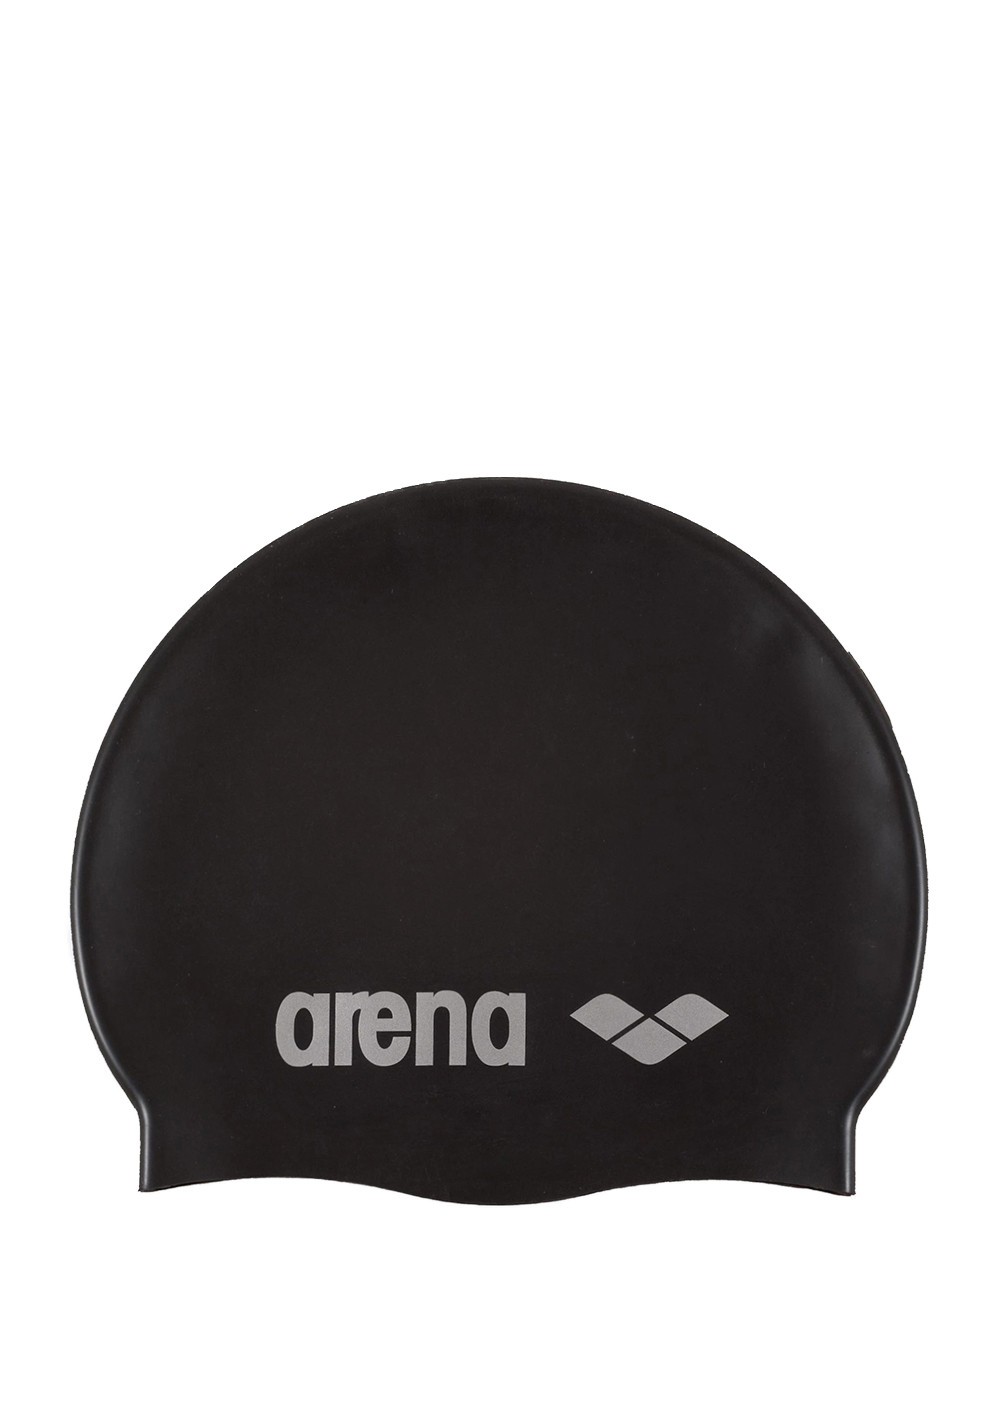 Шапочка для плавания  Arena CLASSIC SILICONE черная 91662-055 изображение 2